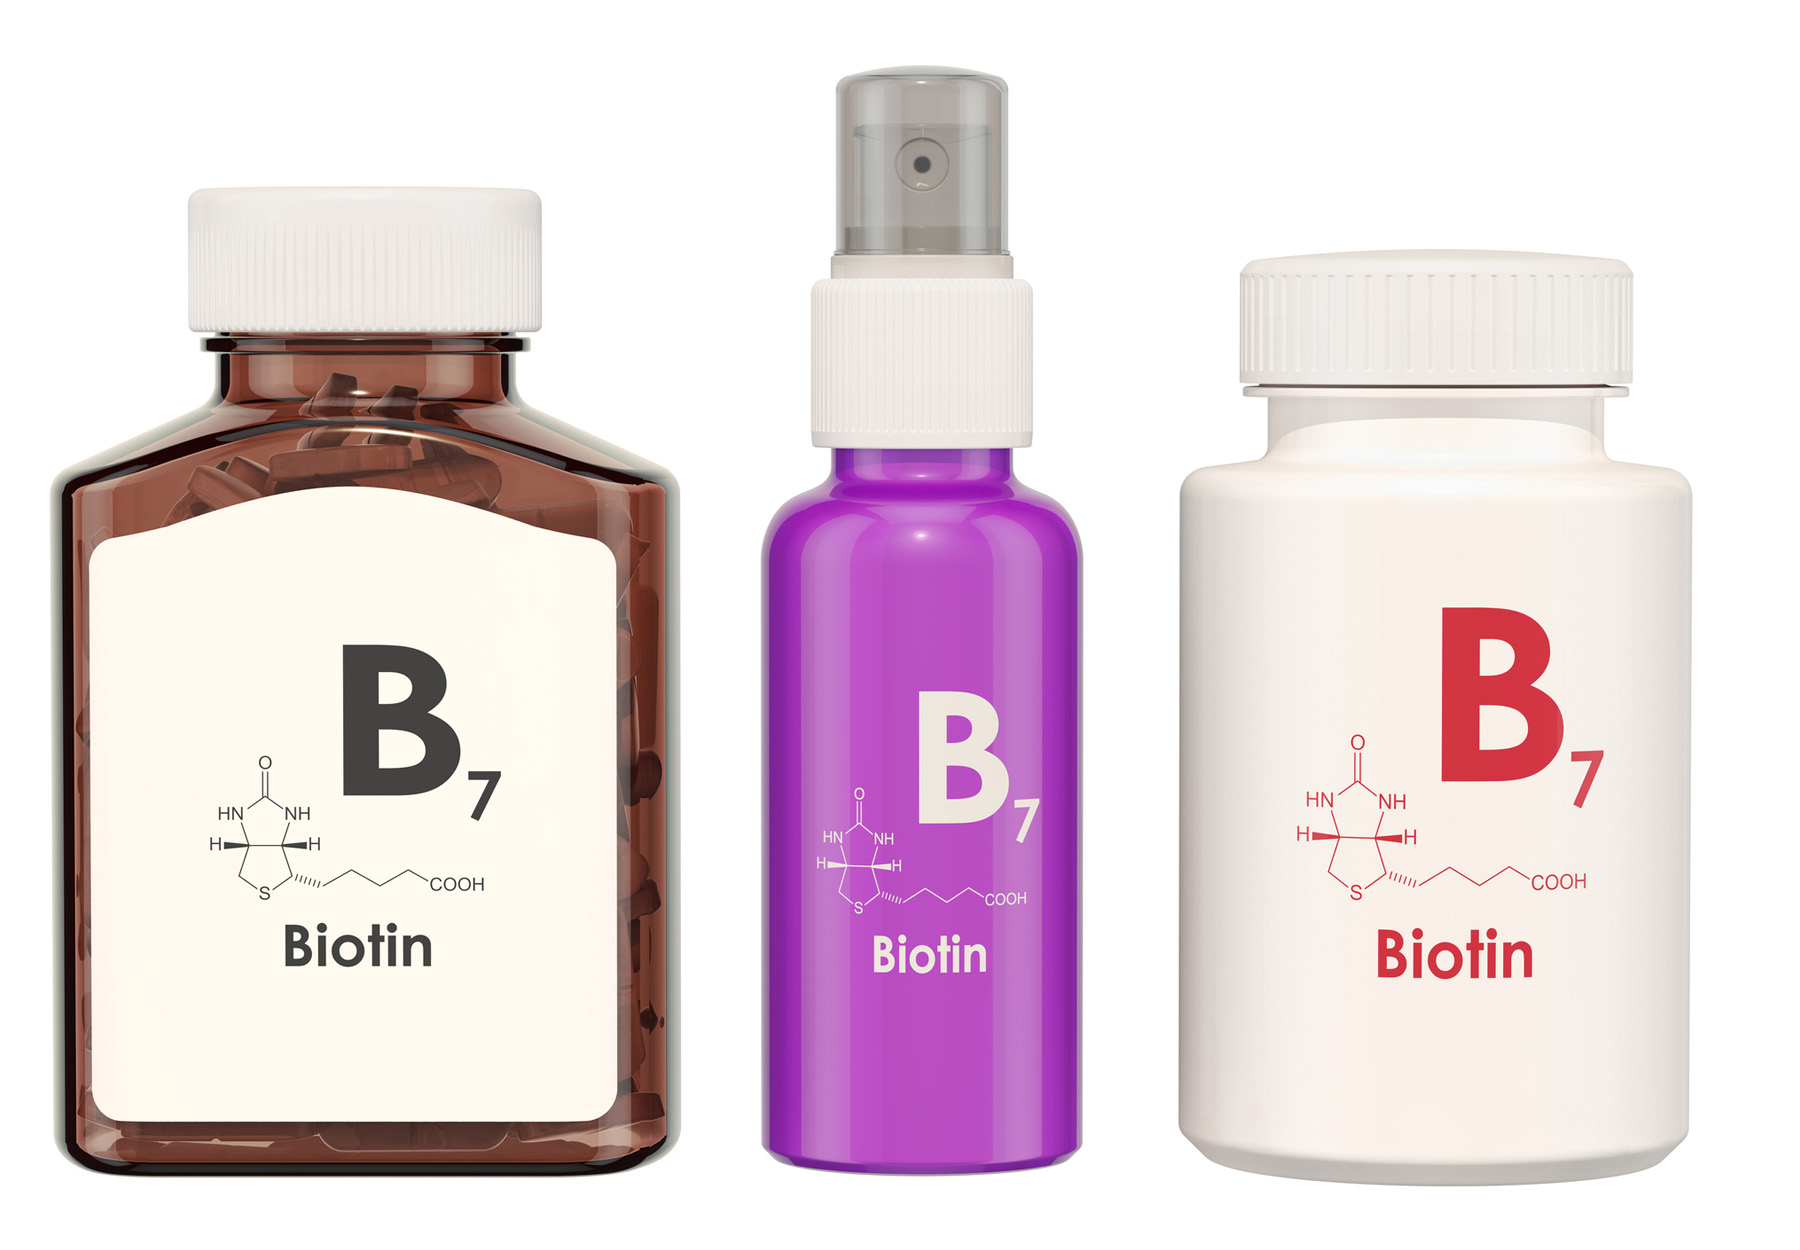 Stock image of three bottles of biotin (B7) supplements